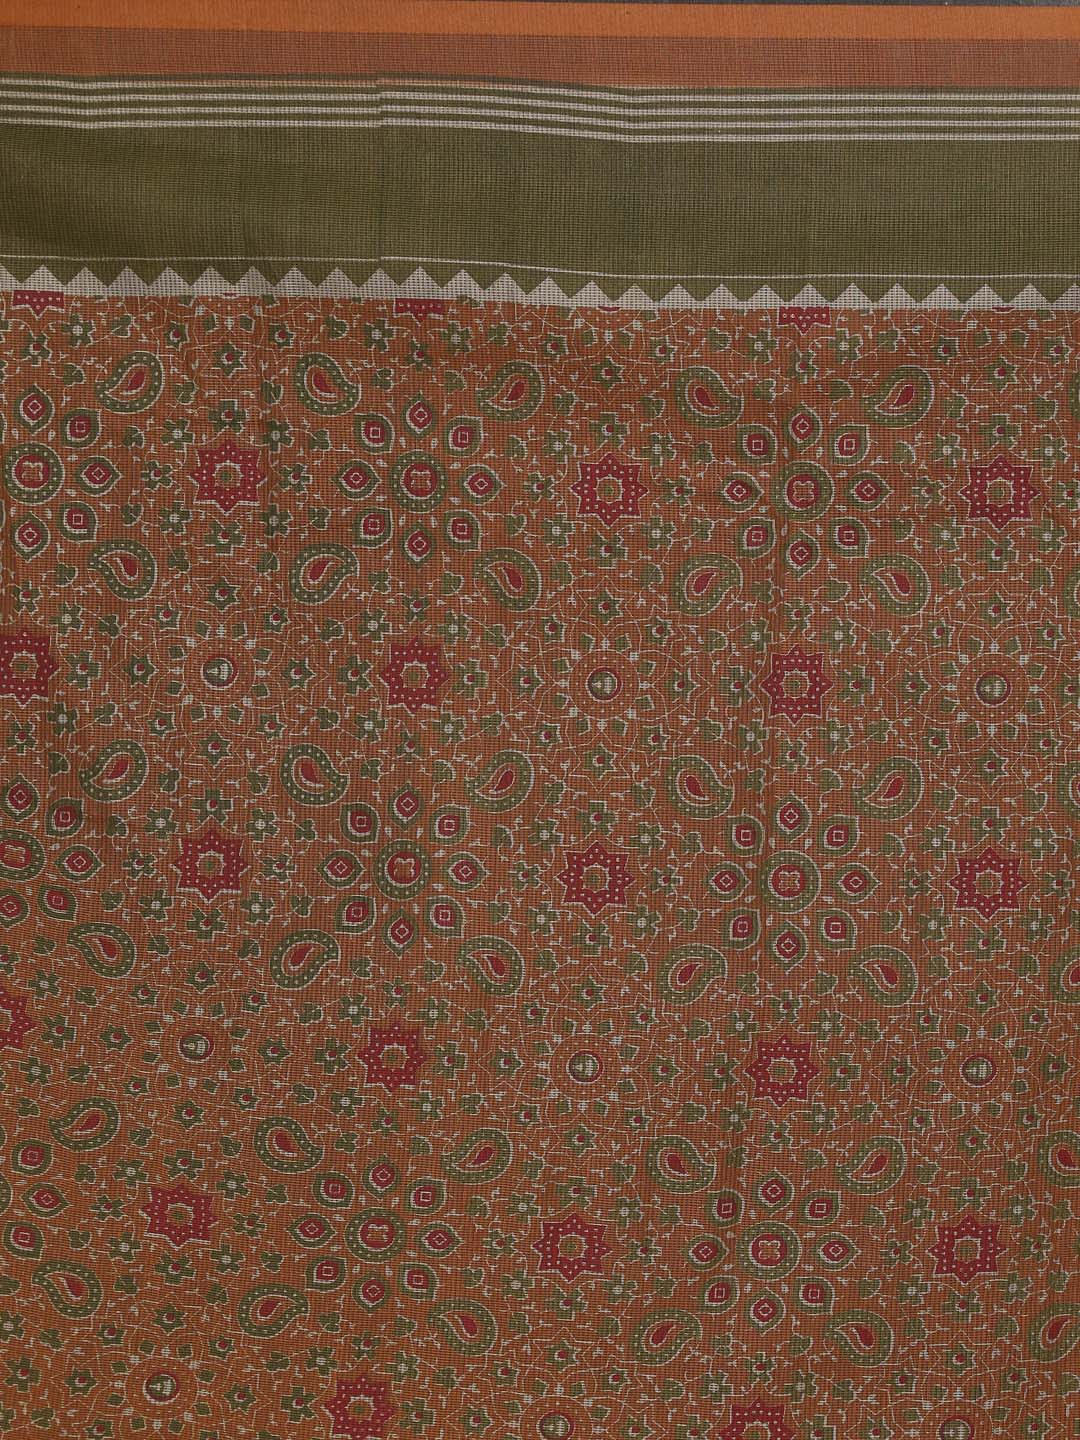 Indethnic Printed Cotton Blend Saree in Tan - Saree Detail View